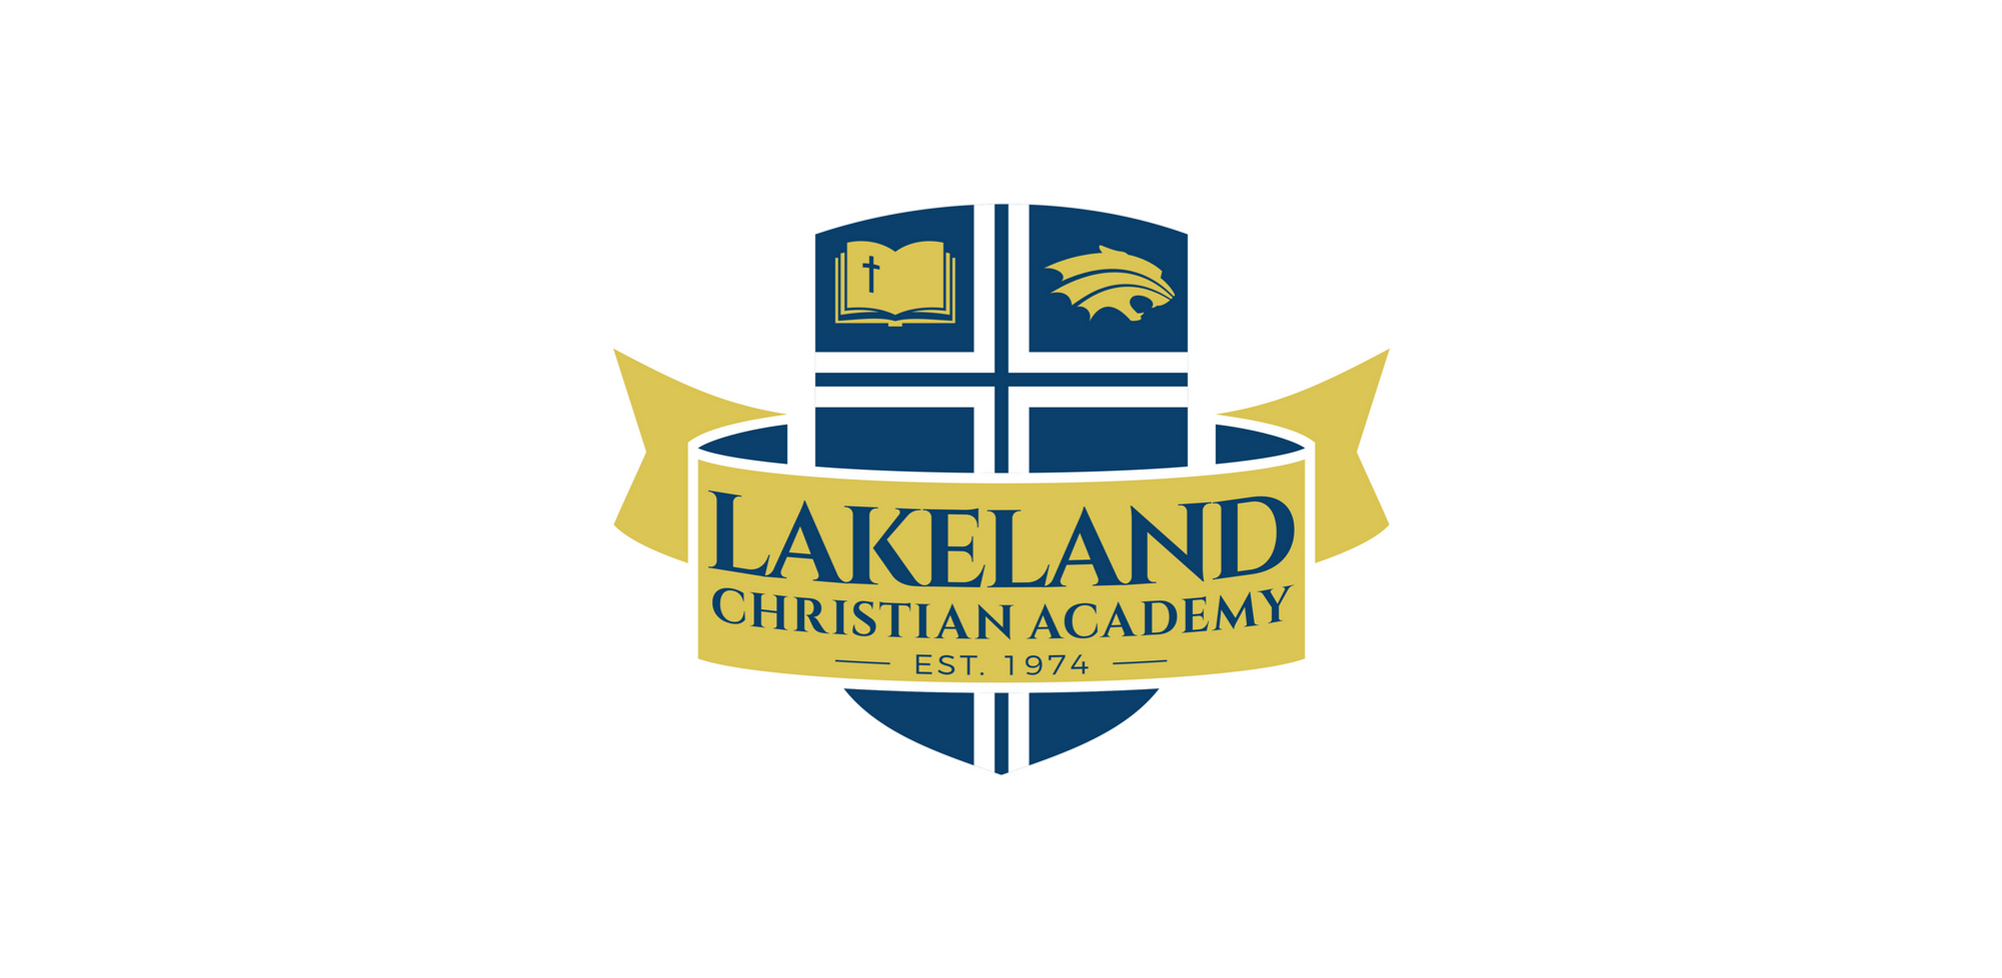 Lakeland_Christian_Academy-0001.jpg